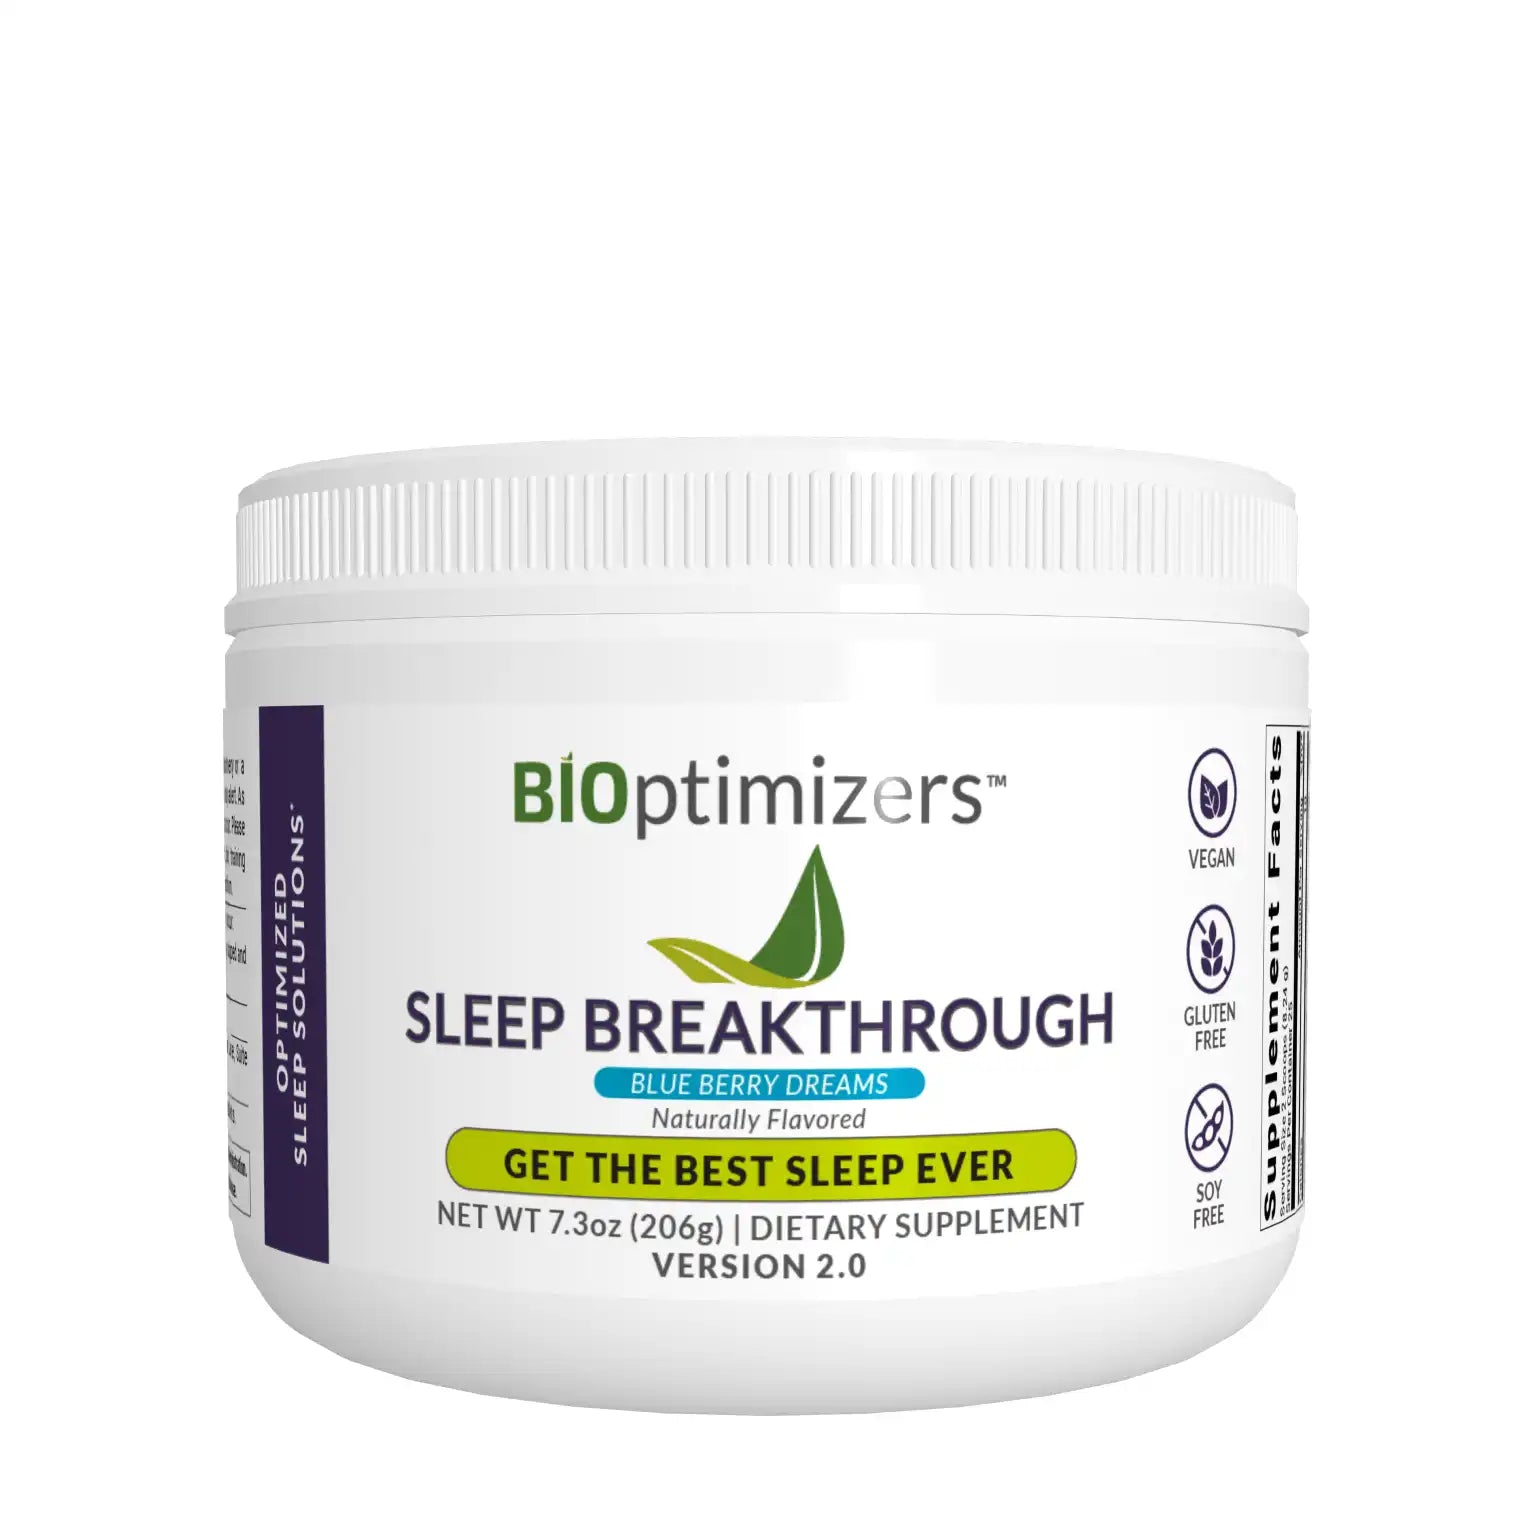 BIOptimizers Sleep Breakthrough Blueberry Dreams 206g